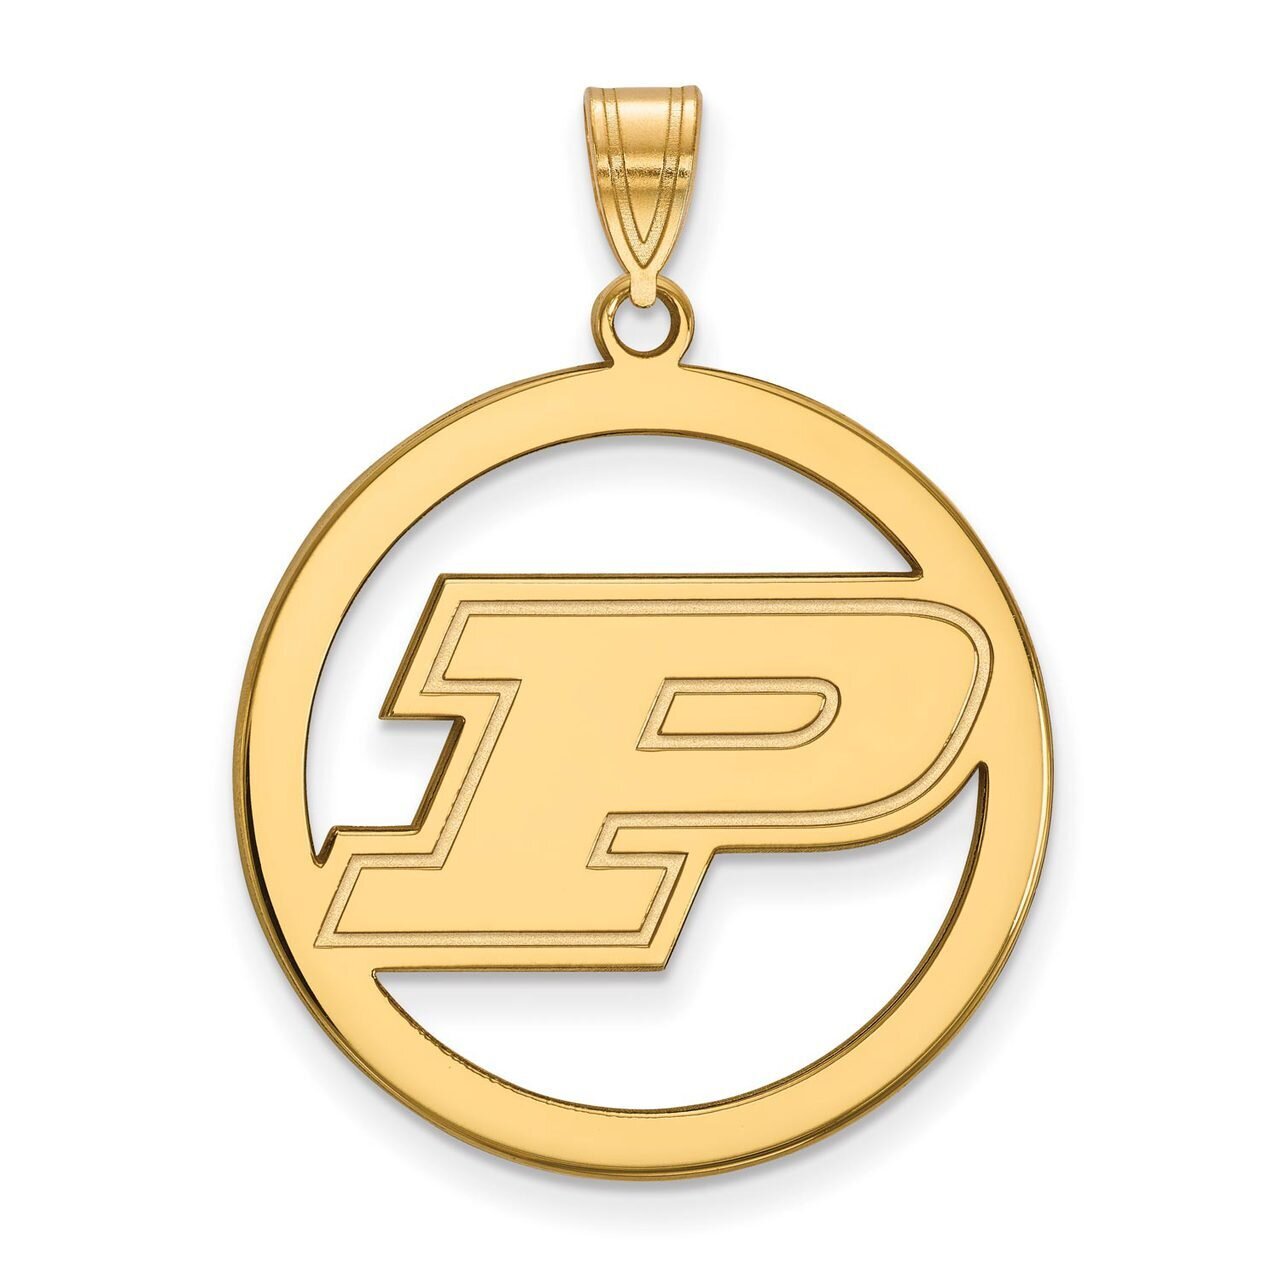 Purdue L Pendant in Circle Gold-plated Silver GP029PU